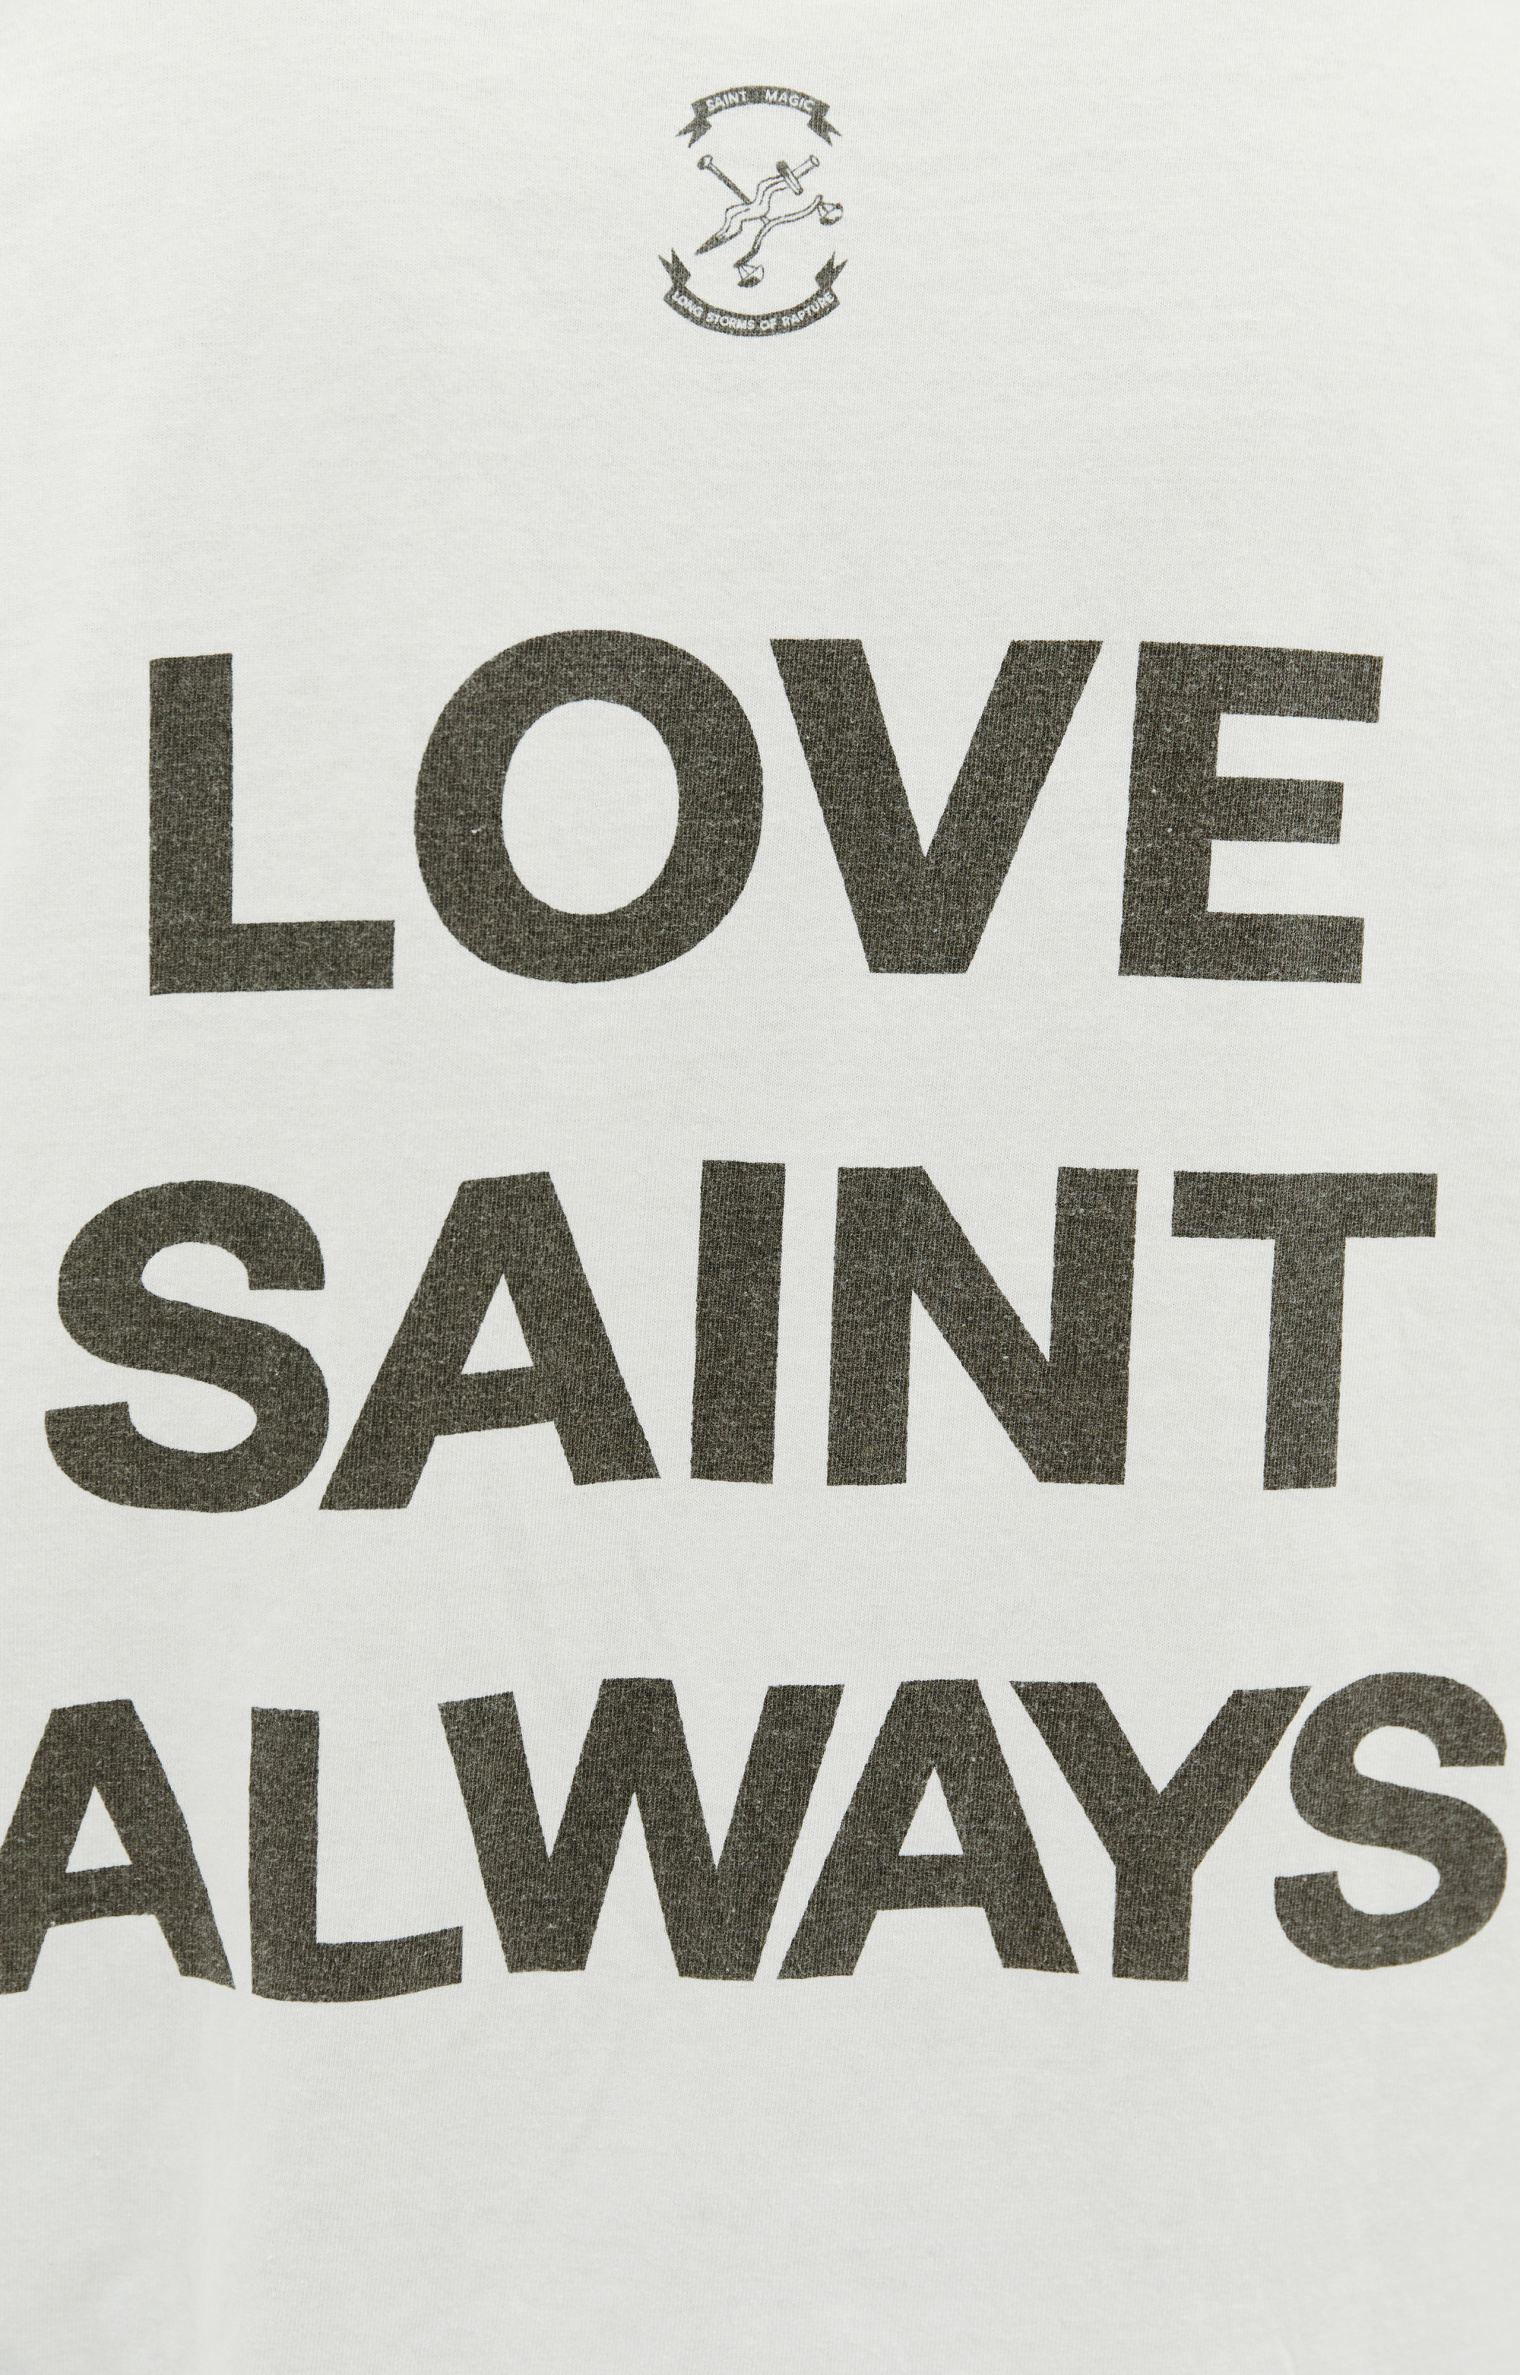 Saint Michael Белая футболка с принтом Hate saint